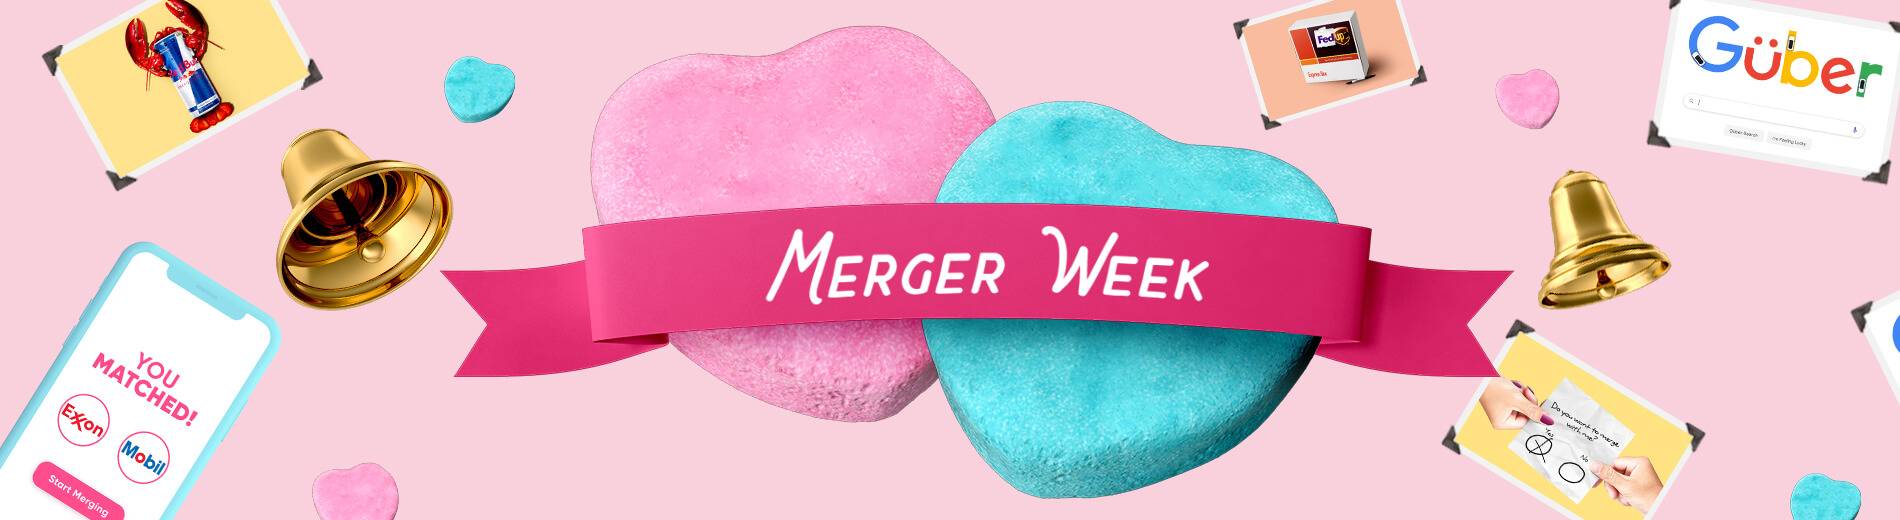 Merger Week banner